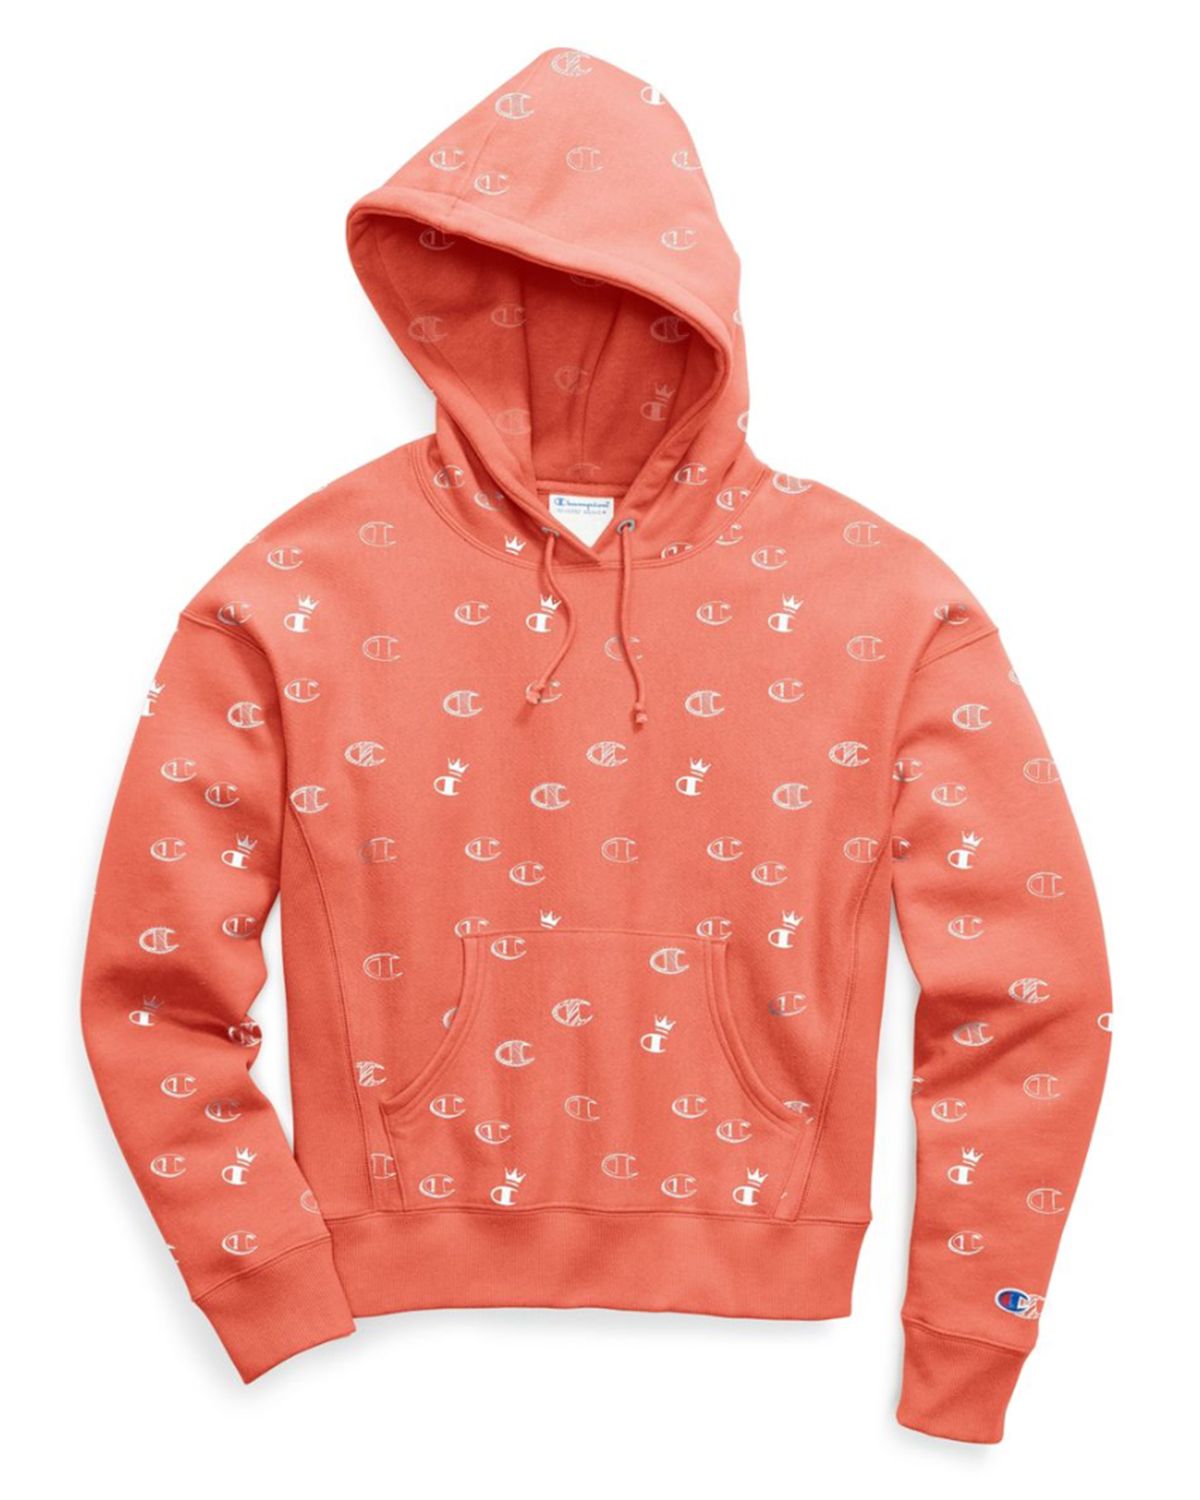 champion reverse weave allover logo pink hoodie